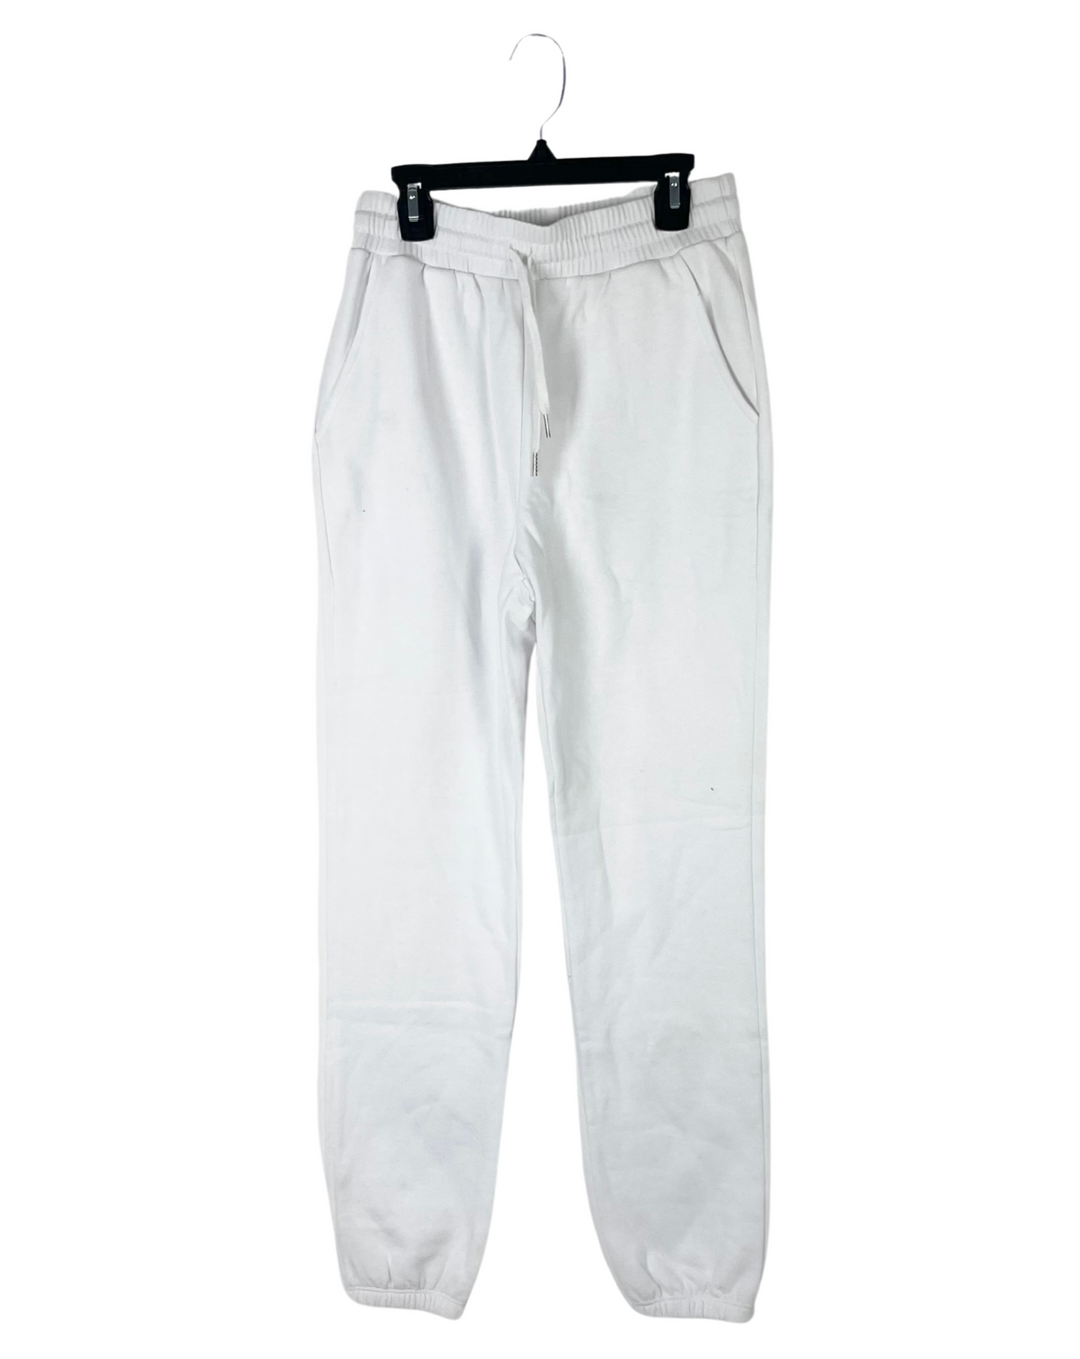 White Sweatpant Joggers - Size 2